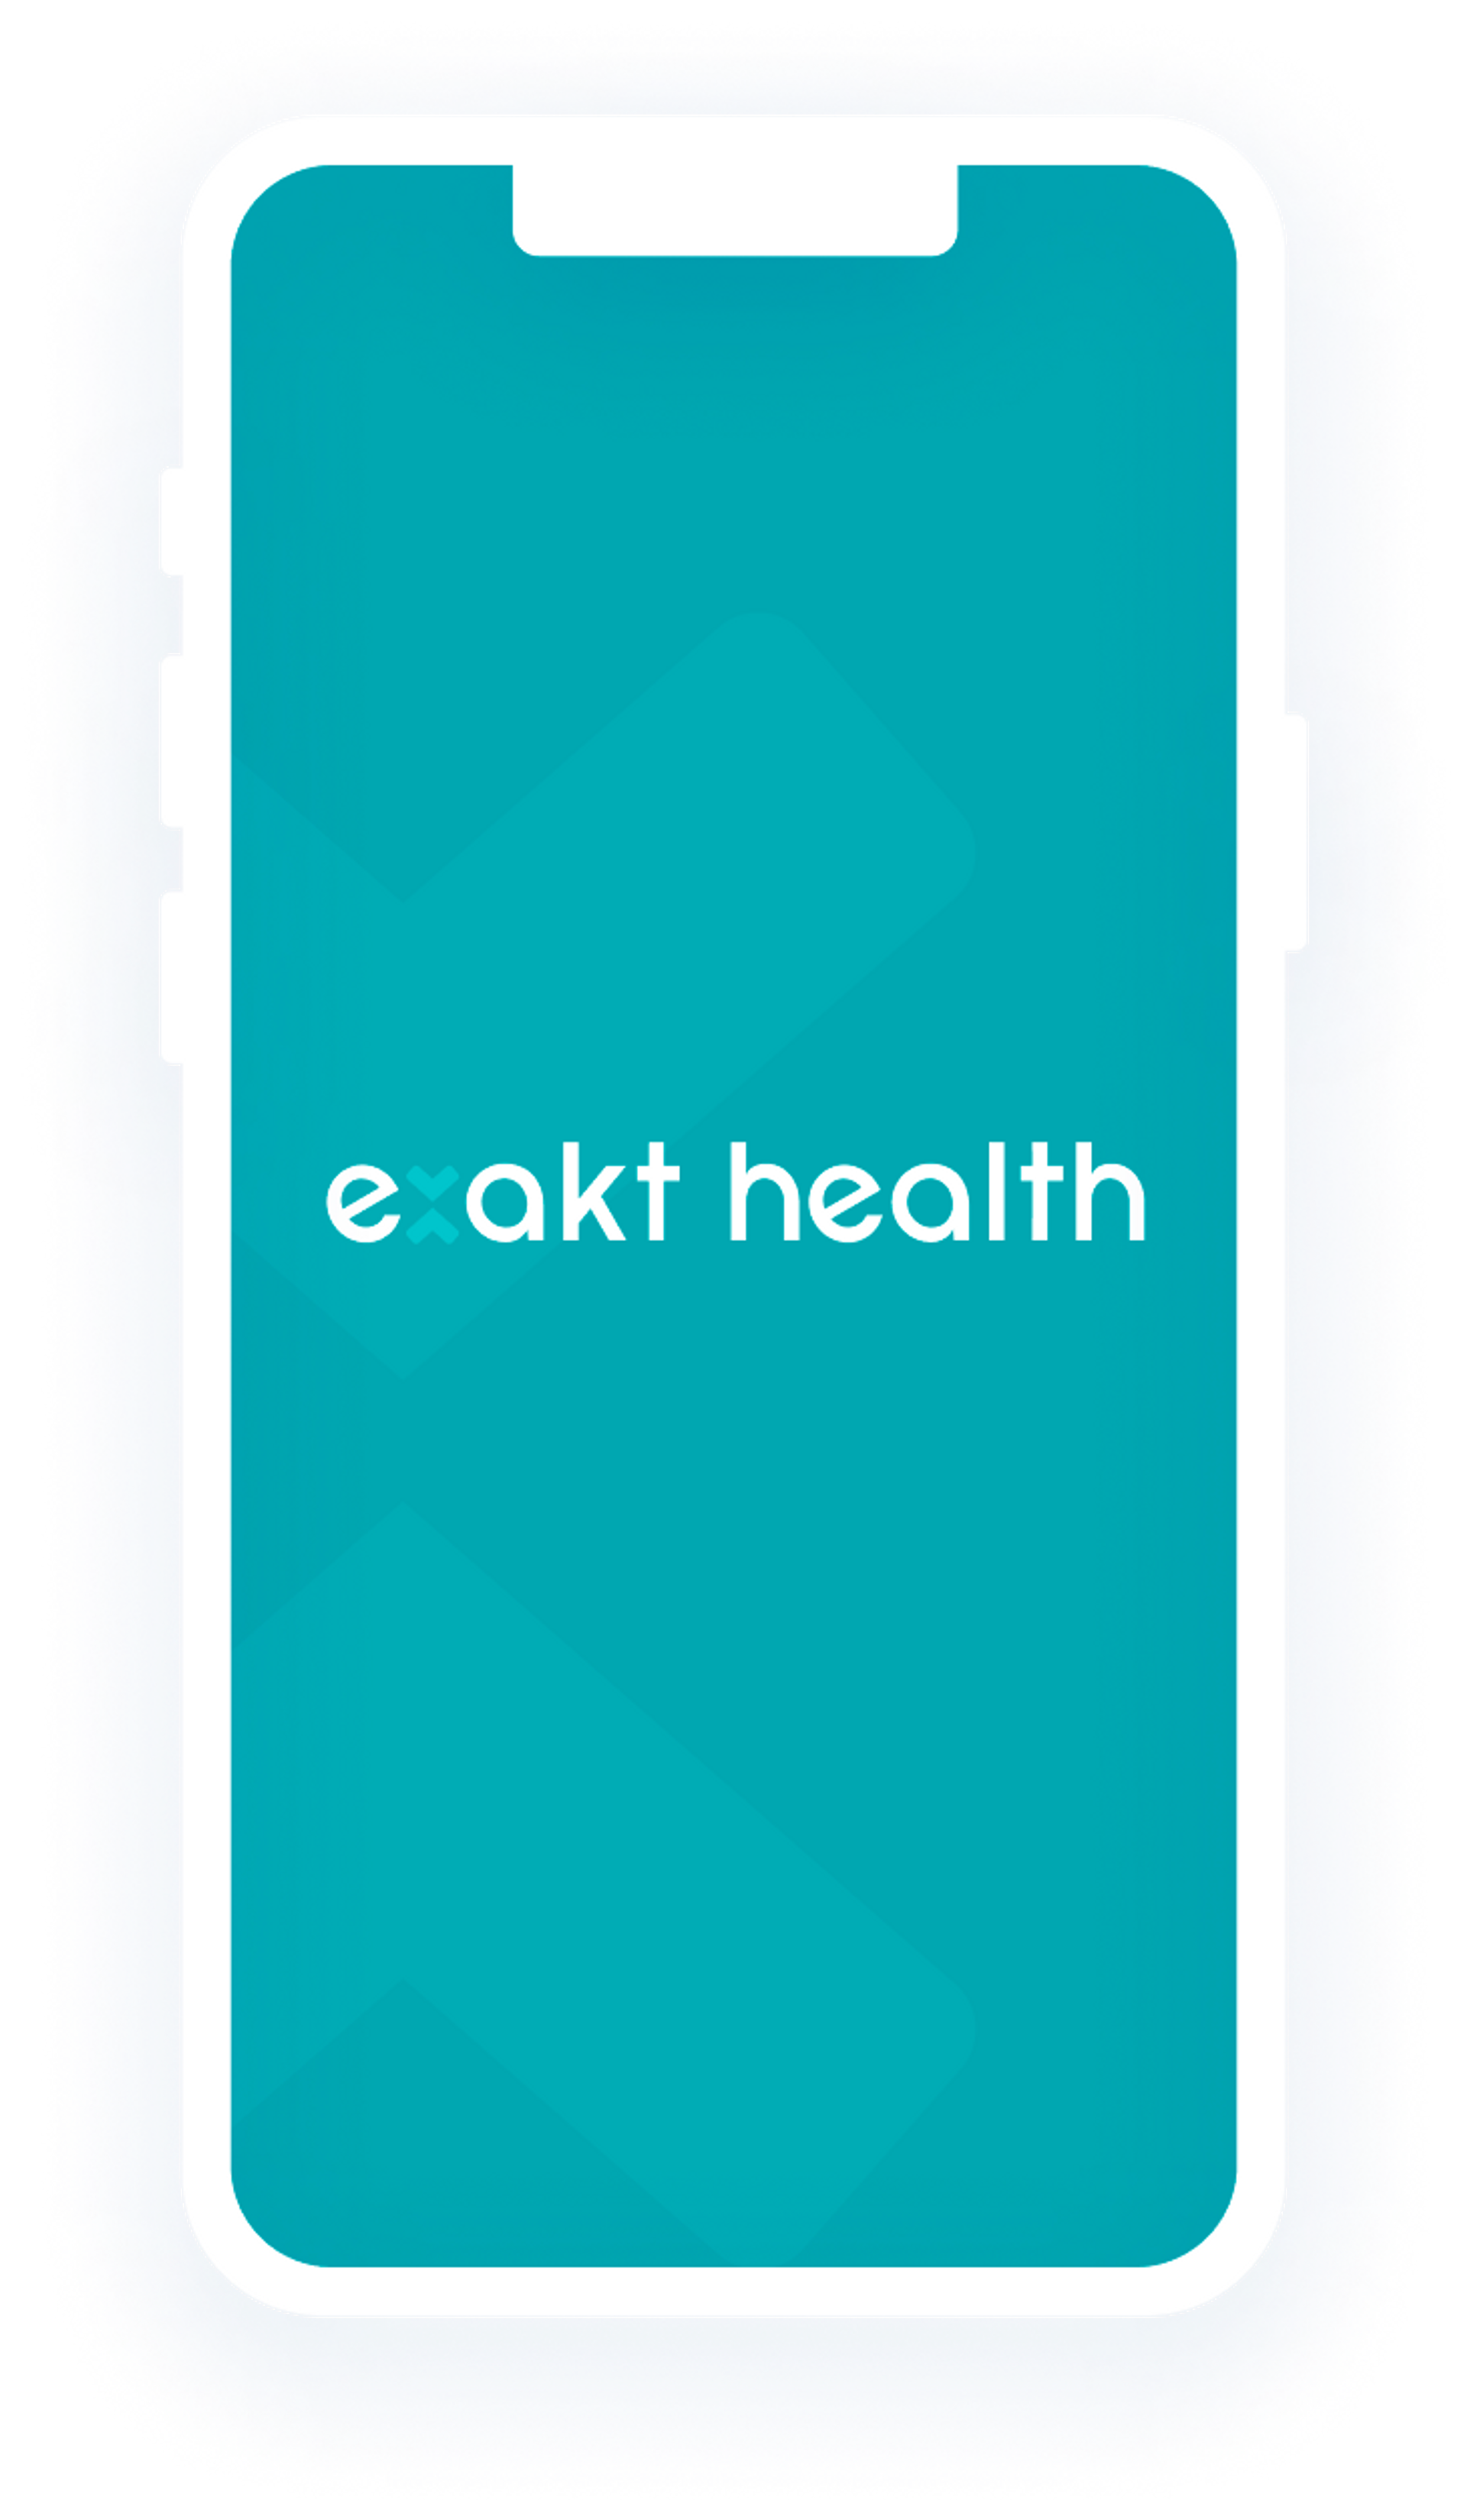 Exakt Health app